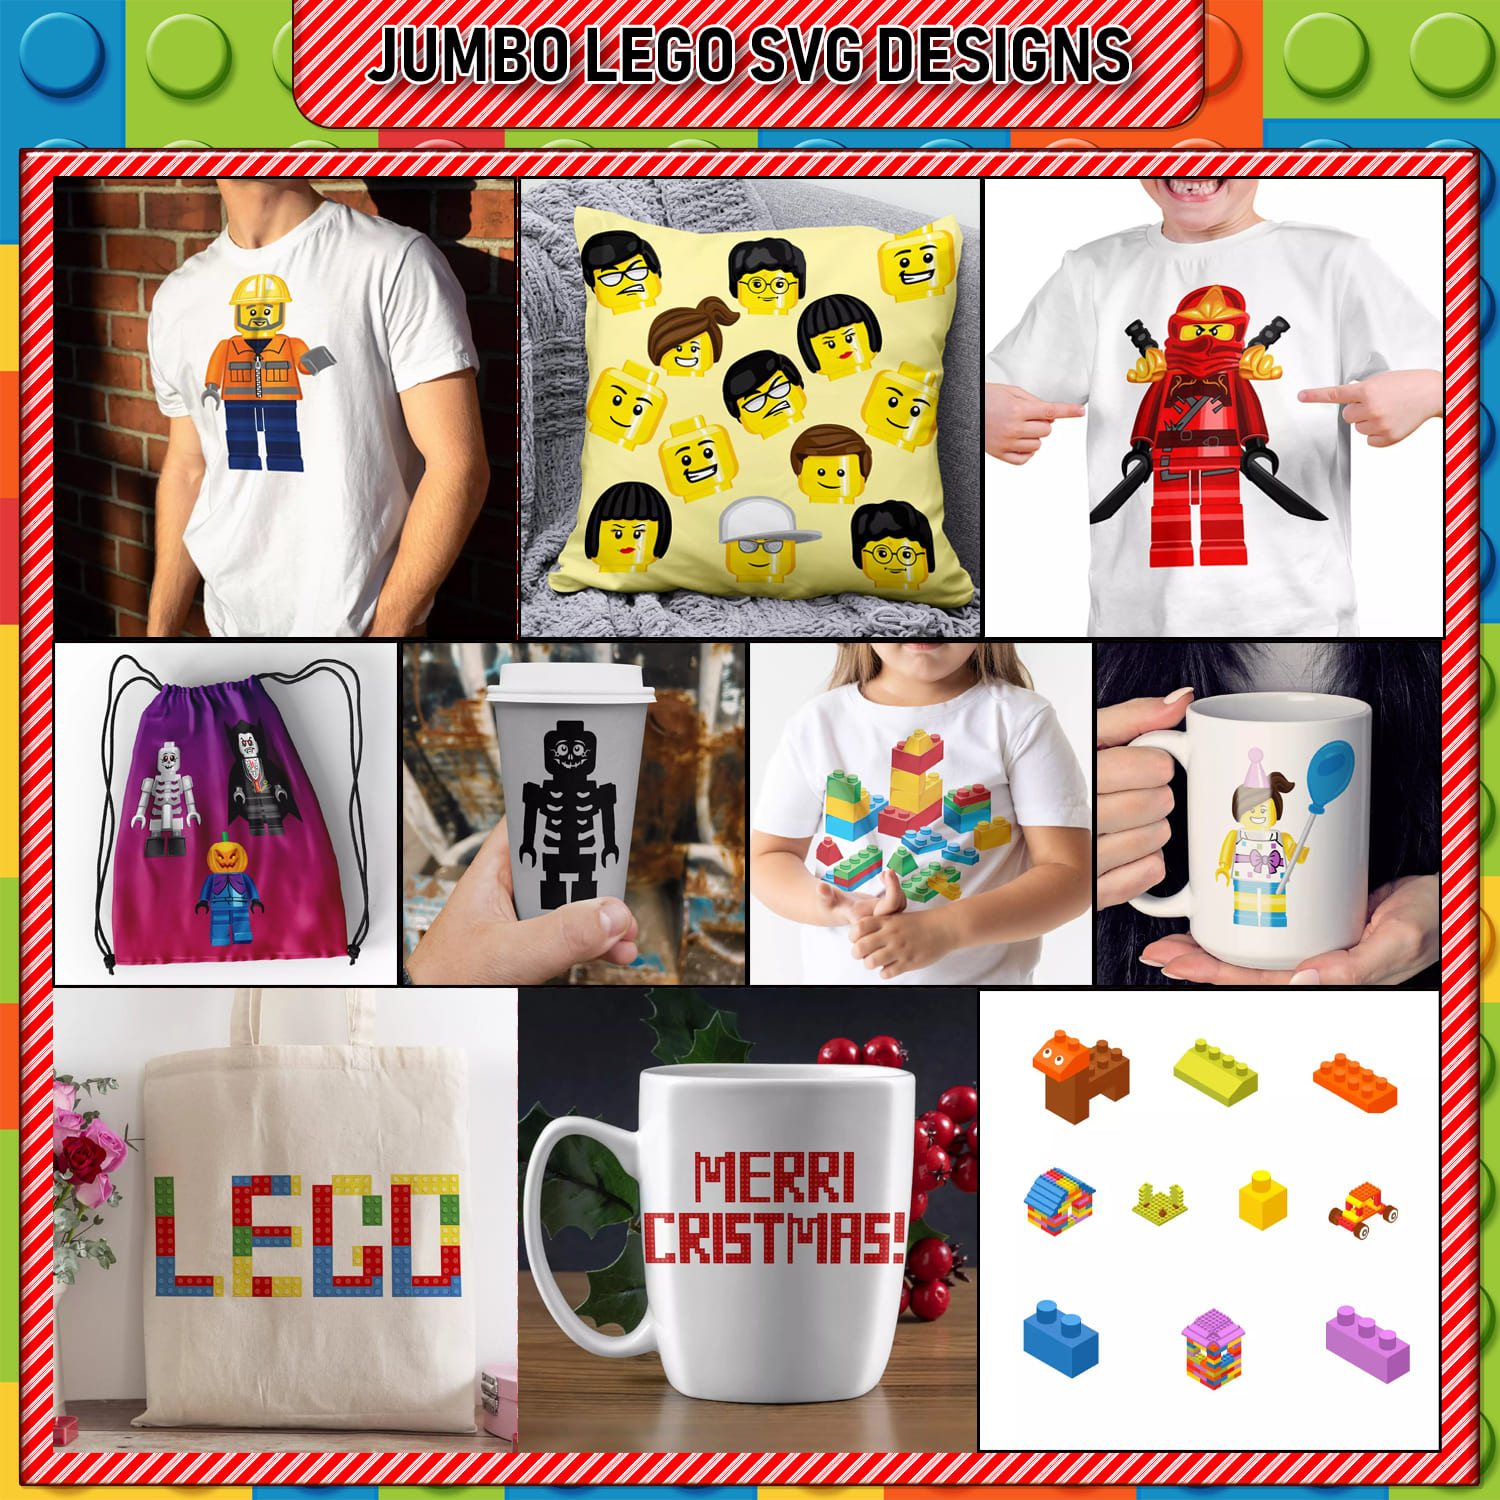 Jumbo Lego SVG Designs cover image.